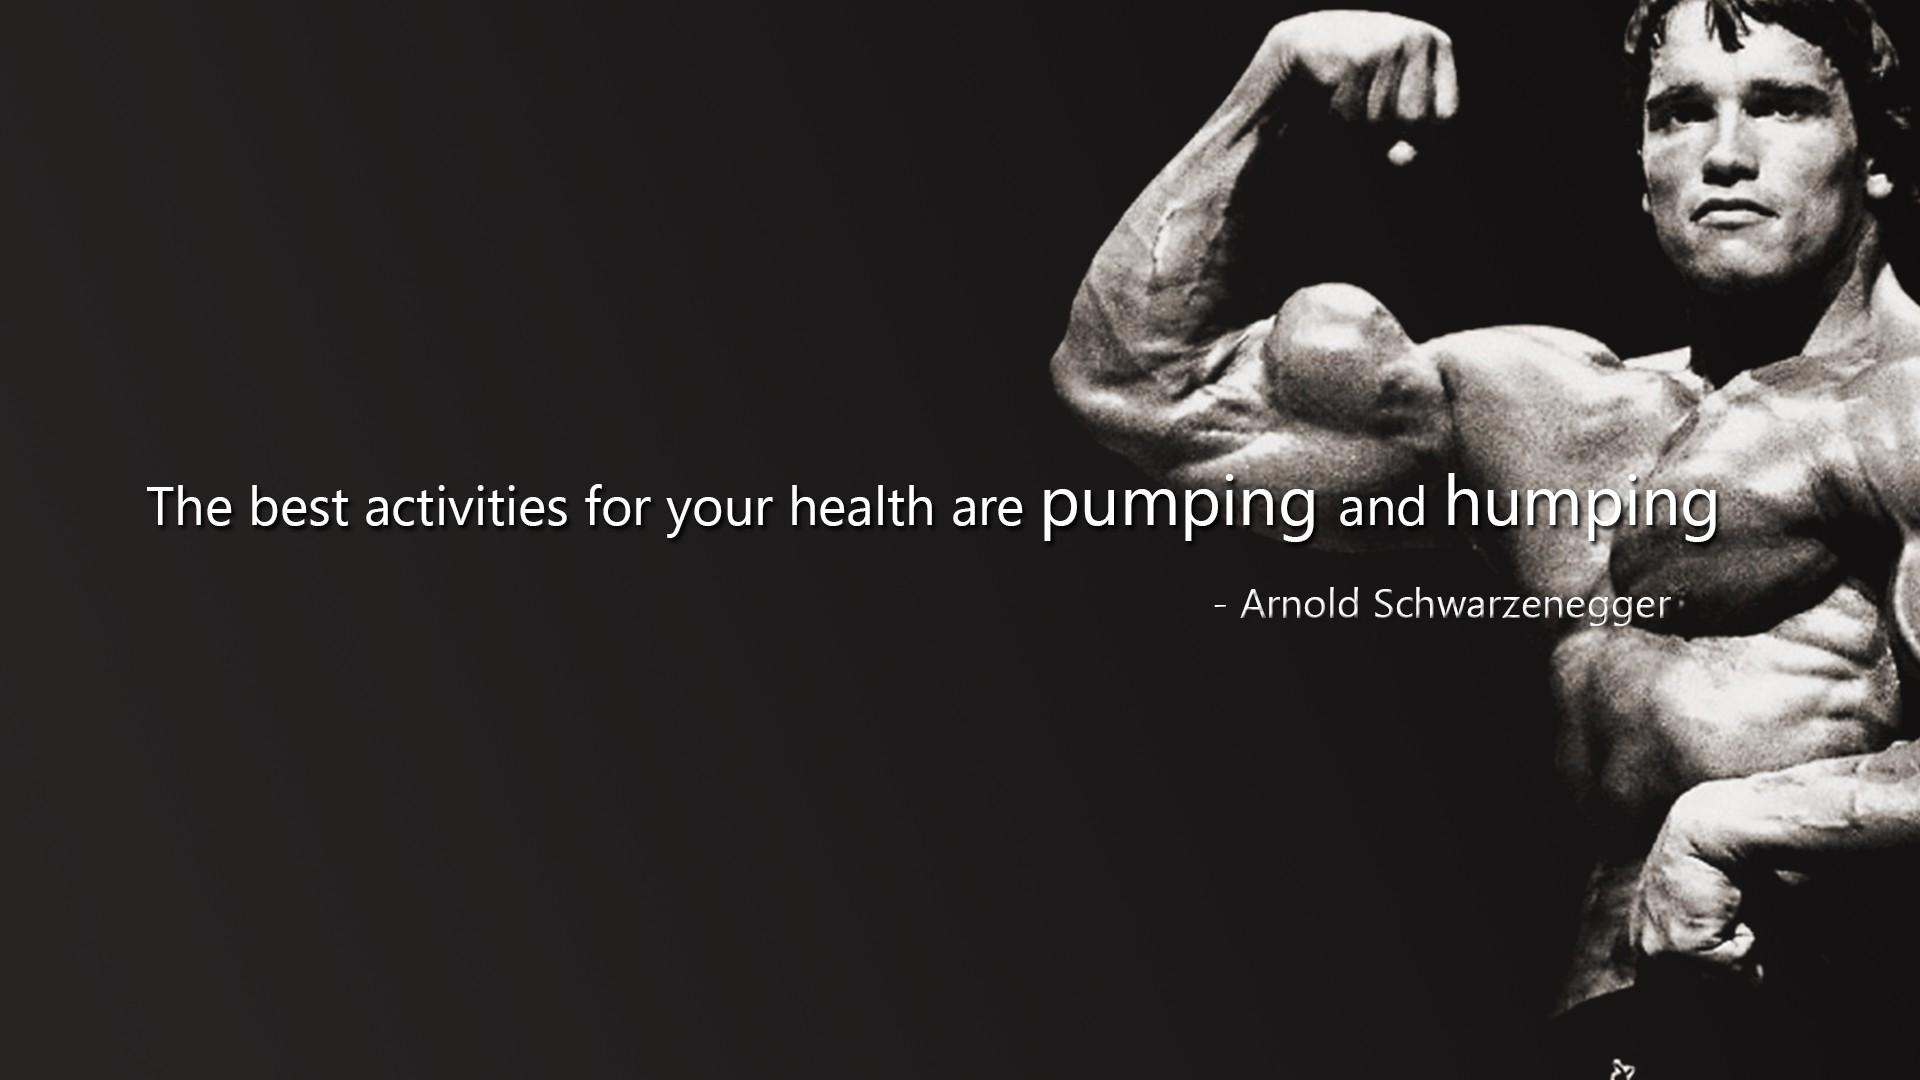 Arnold Schwarzenegger: The Ultimate Fitness Motivation for Your Bedroom!